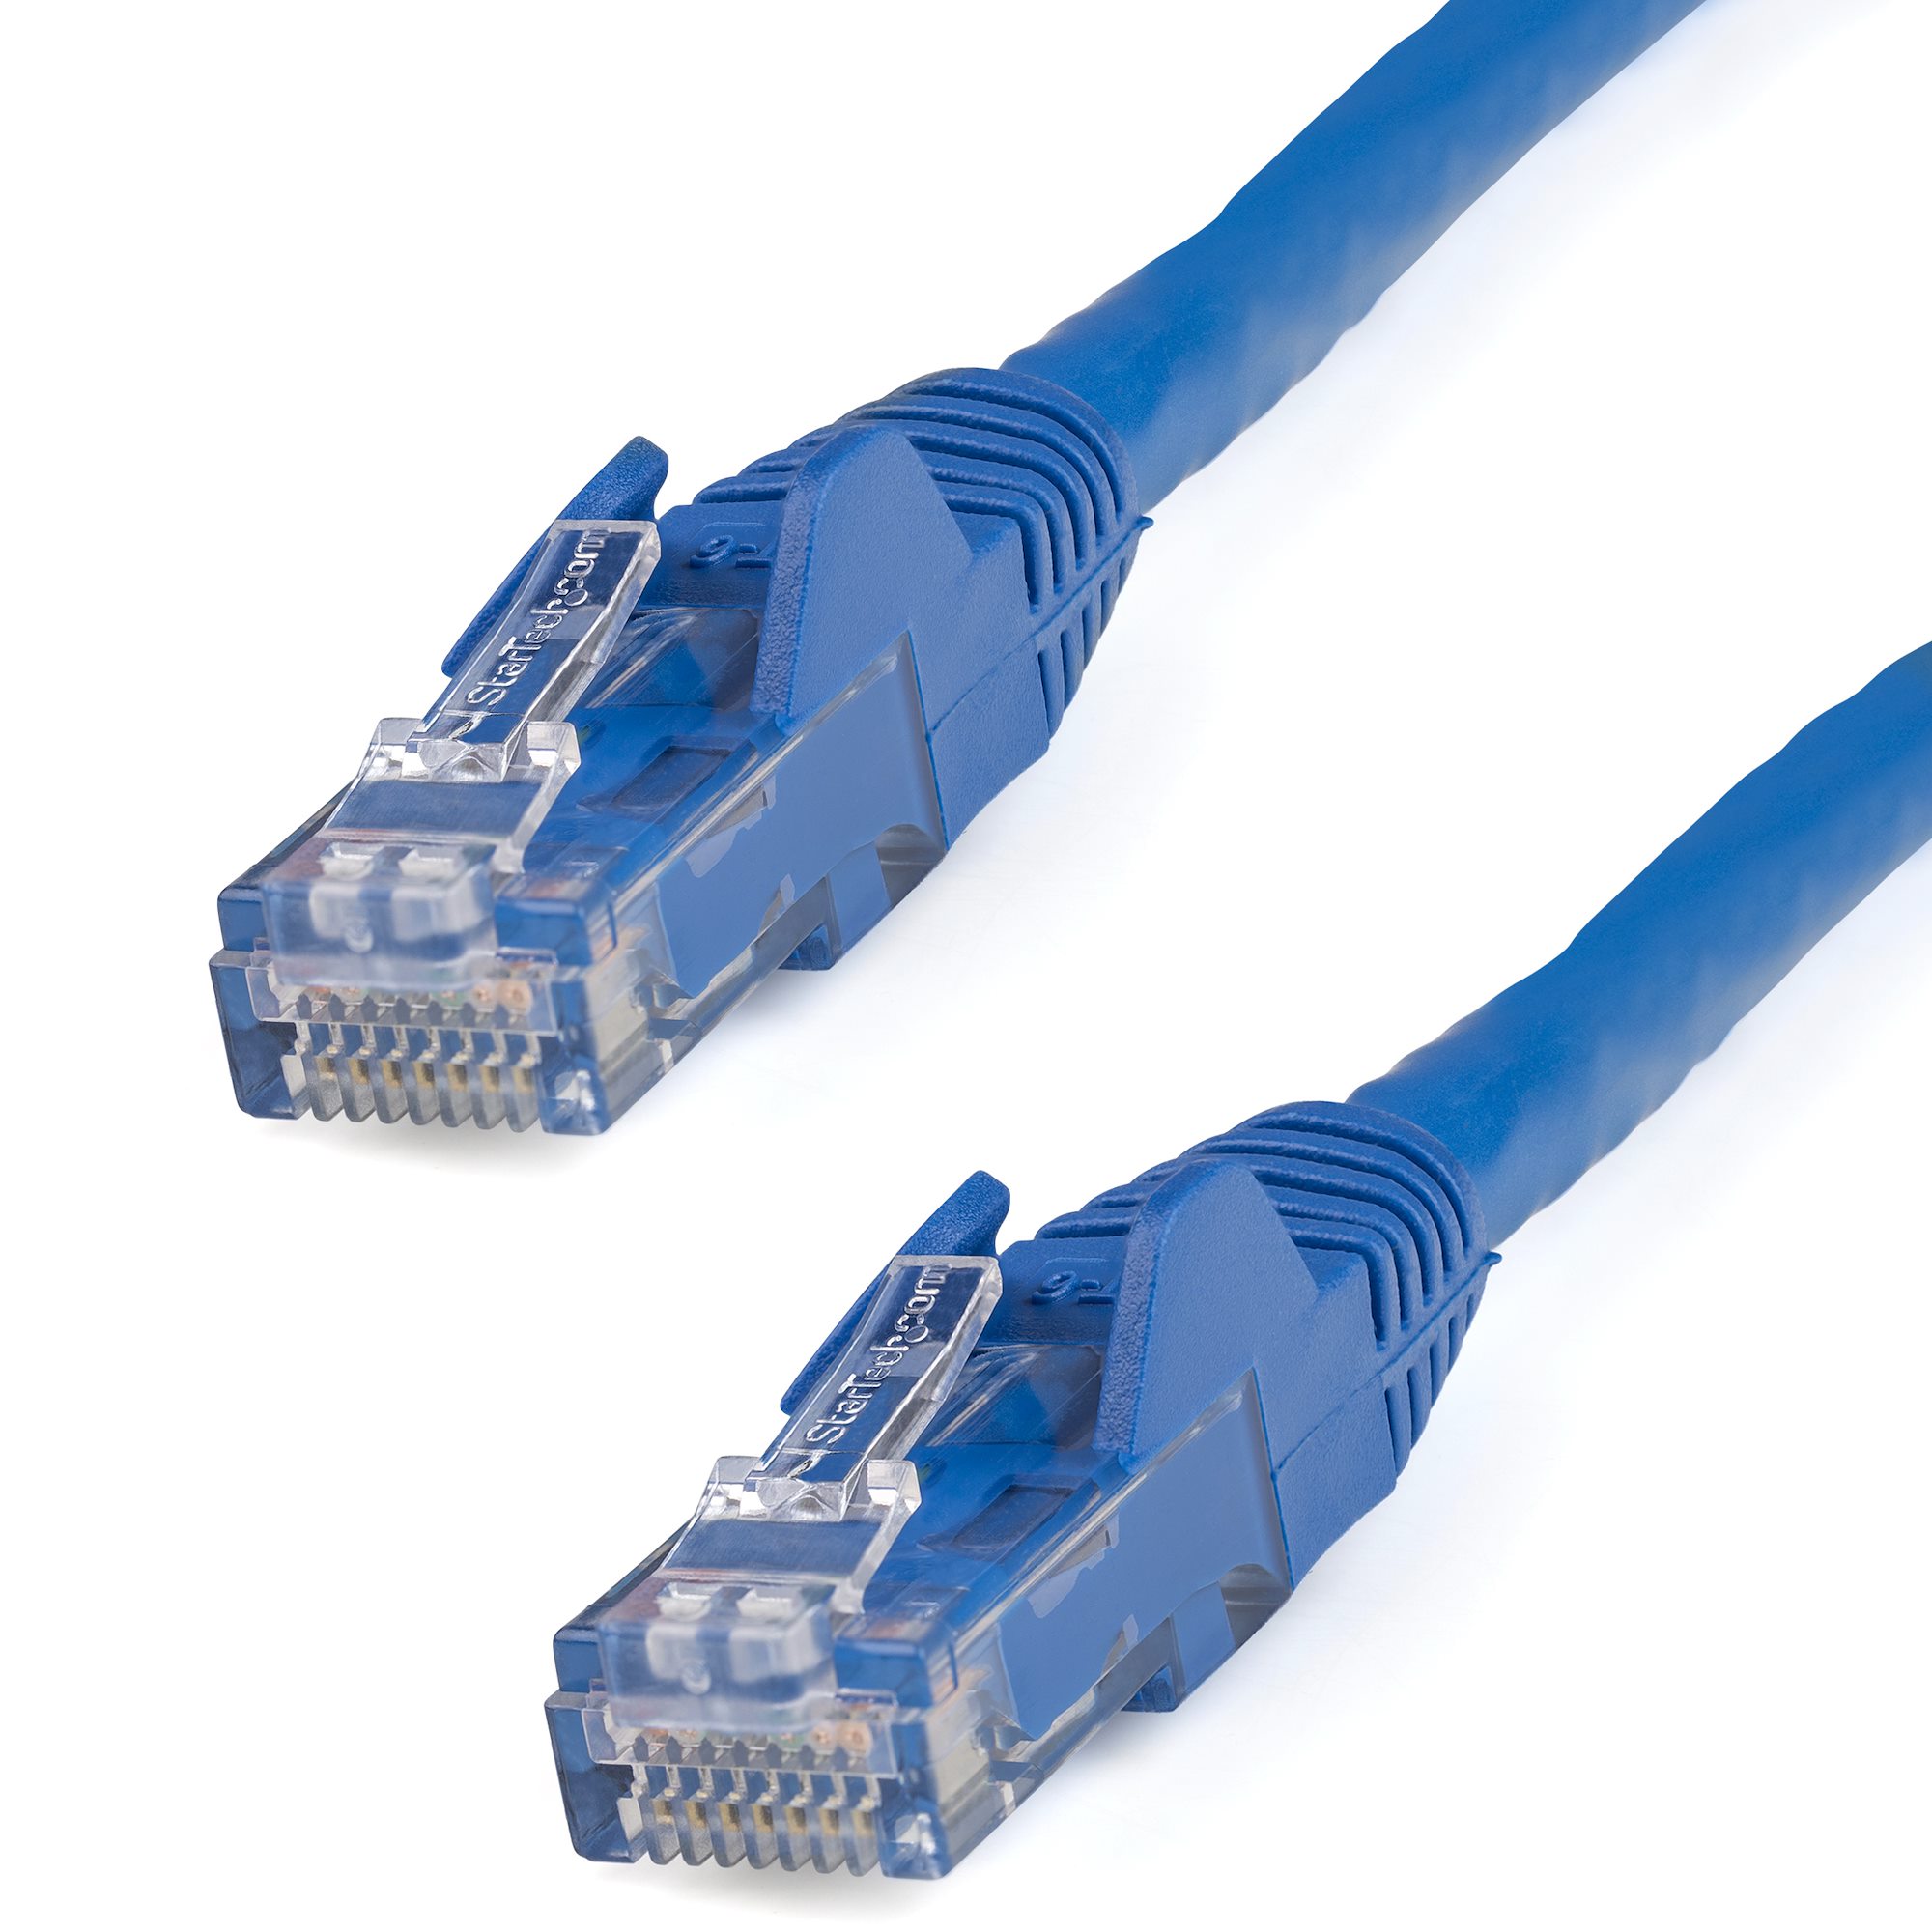 10ft RJ45 Cat5e Ethernet/Networ​k UTP Cable/Cord/Wire​{PURPLE ALL COPPER notCCA 